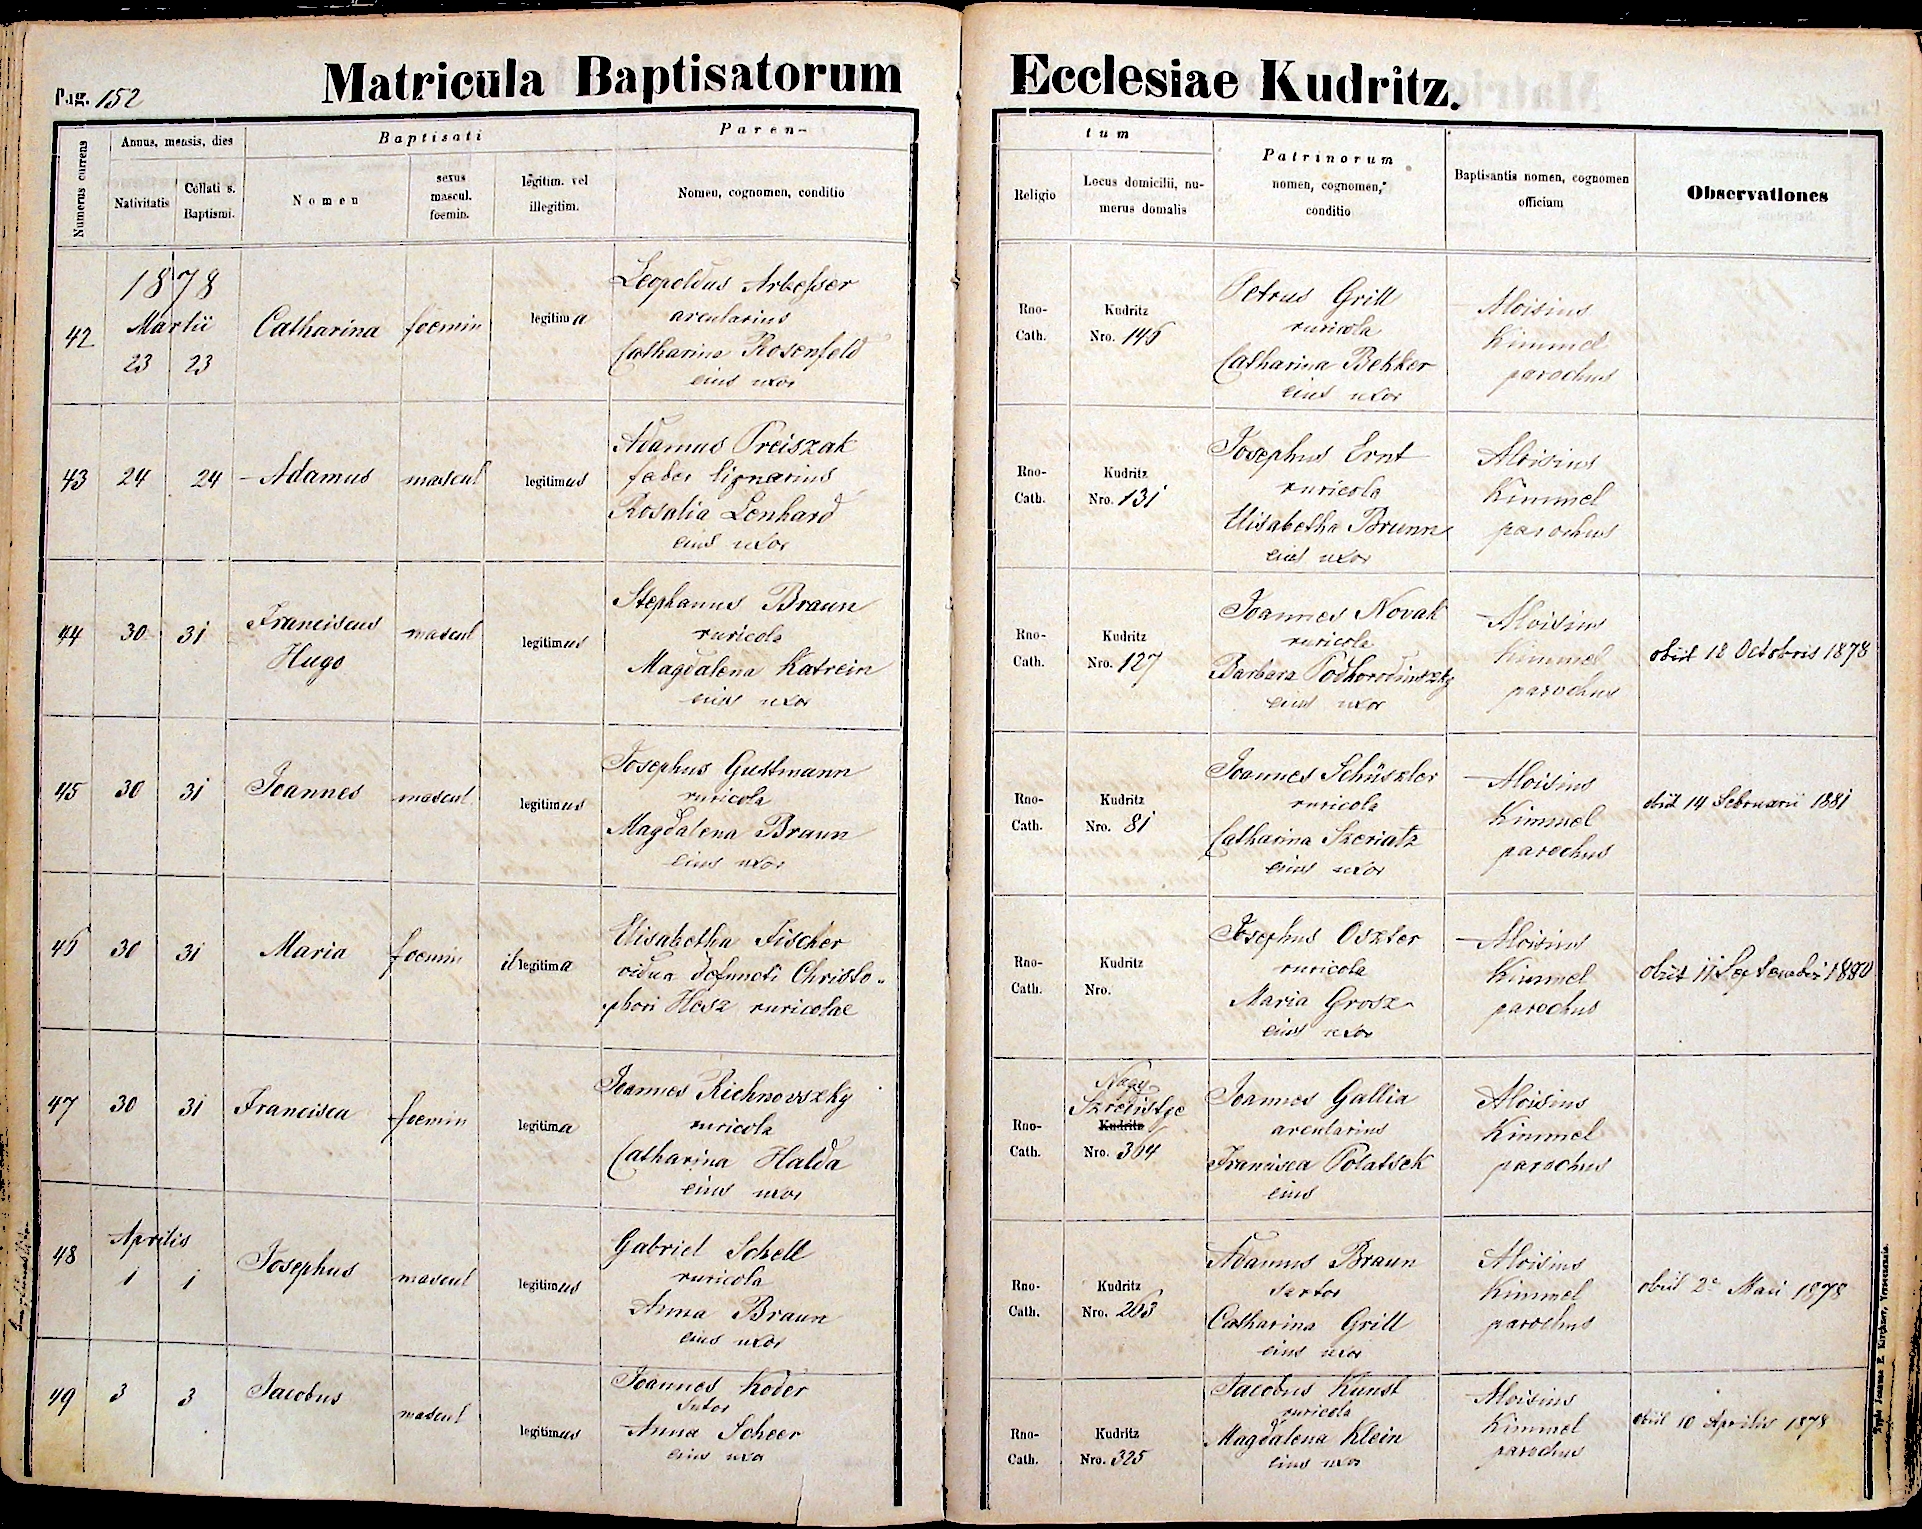 images/church_records/BIRTHS/1870-1879B/1878/152